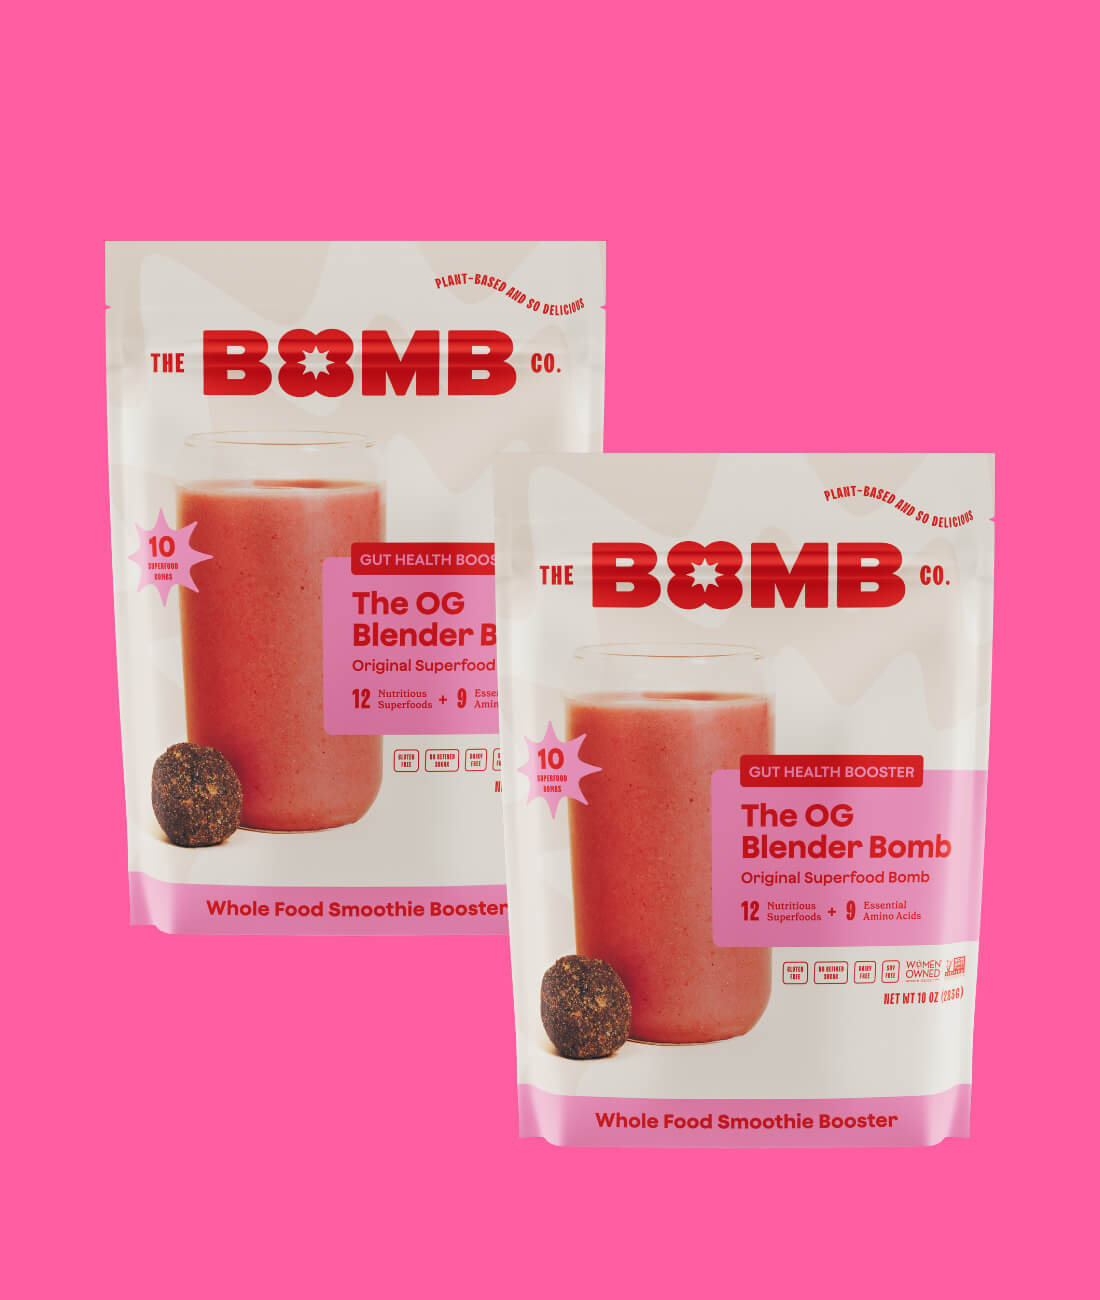 Blender Bombs Original